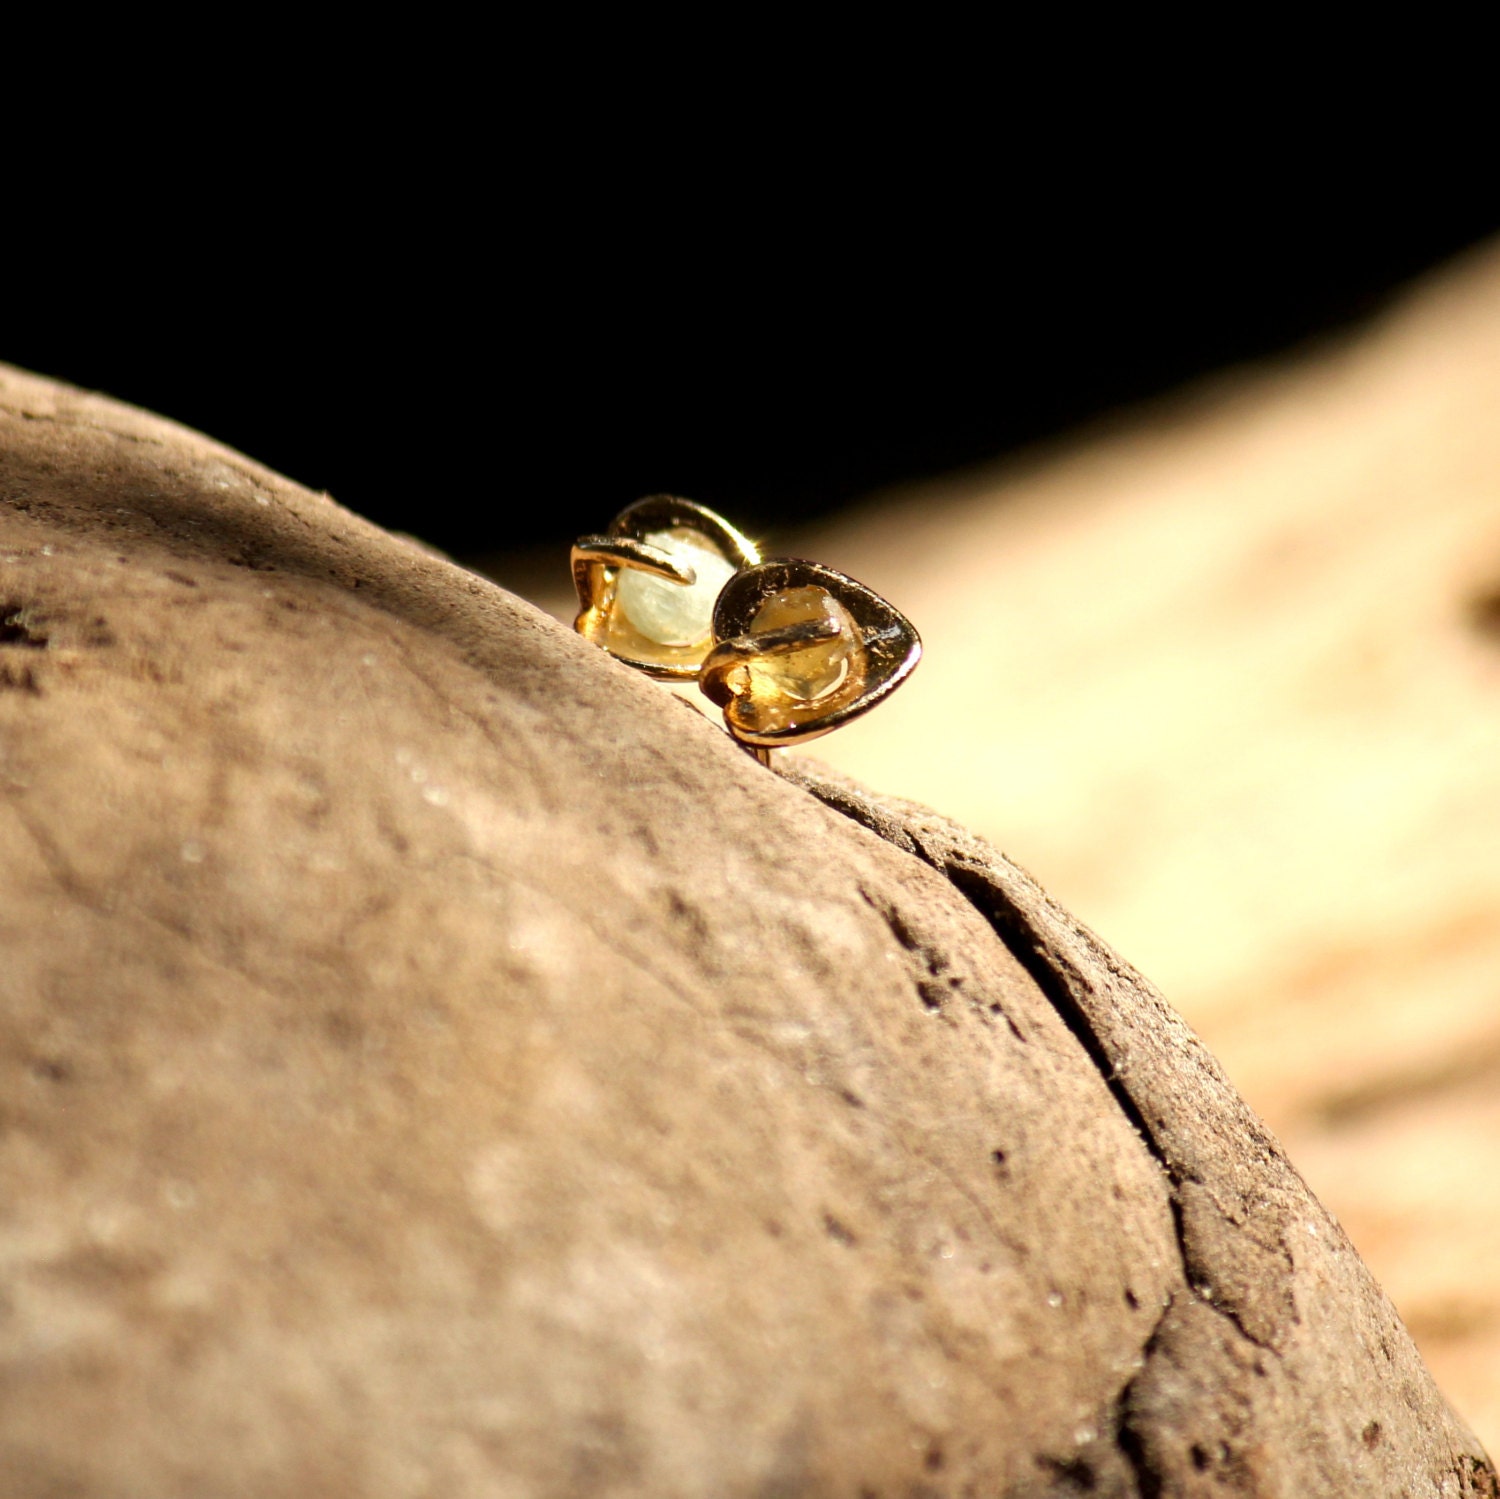 Gold filled ear post stud earrings with raw gemstones - GardensOfTheSun